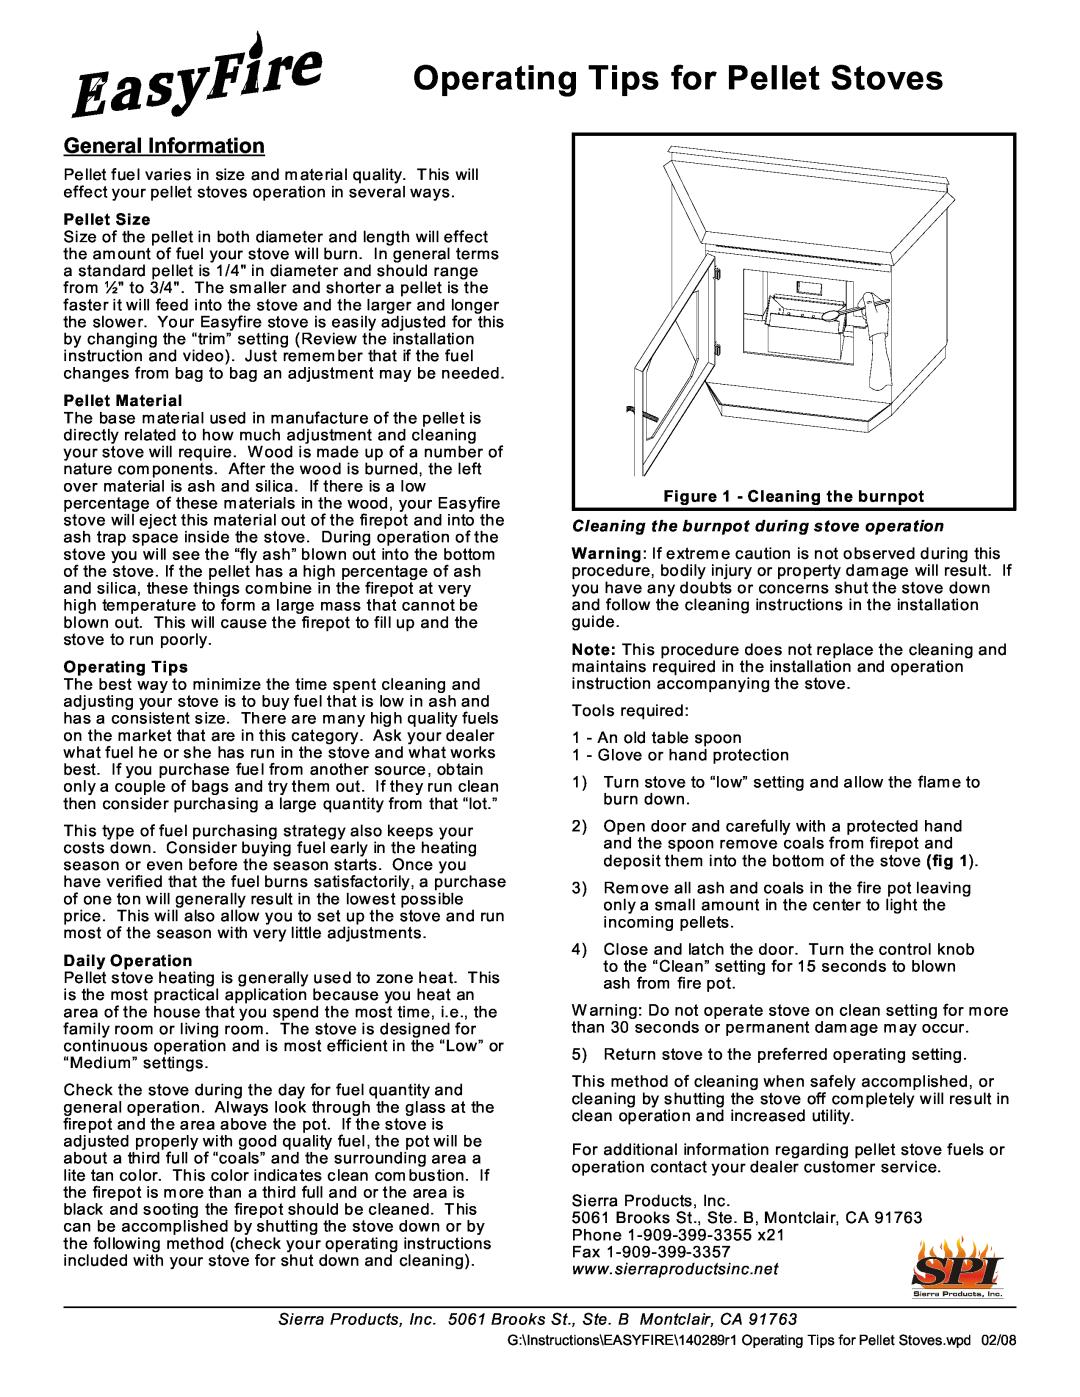 Sierra Products manual Operating Tips for Pellet Stoves, General Information, Pellet Size, Pellet Material 